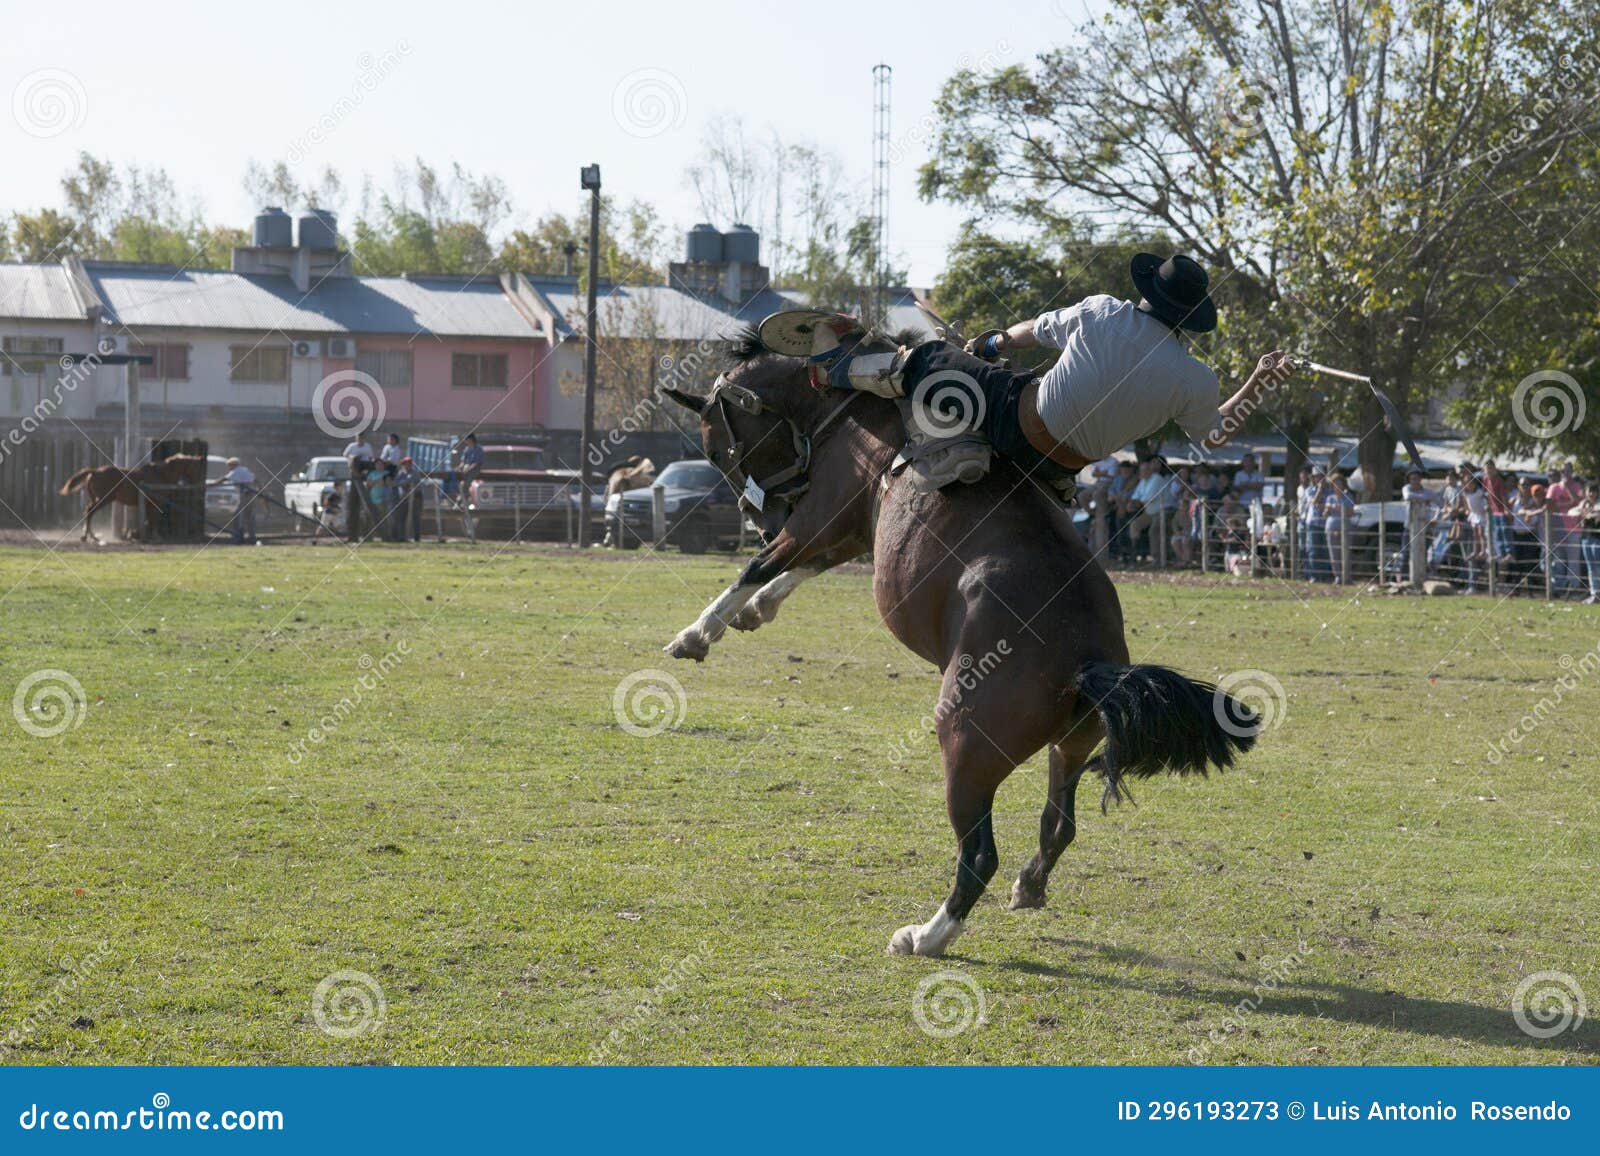 gaucho cowboy vaquero at a rodeo riding a horse at a show in argentina